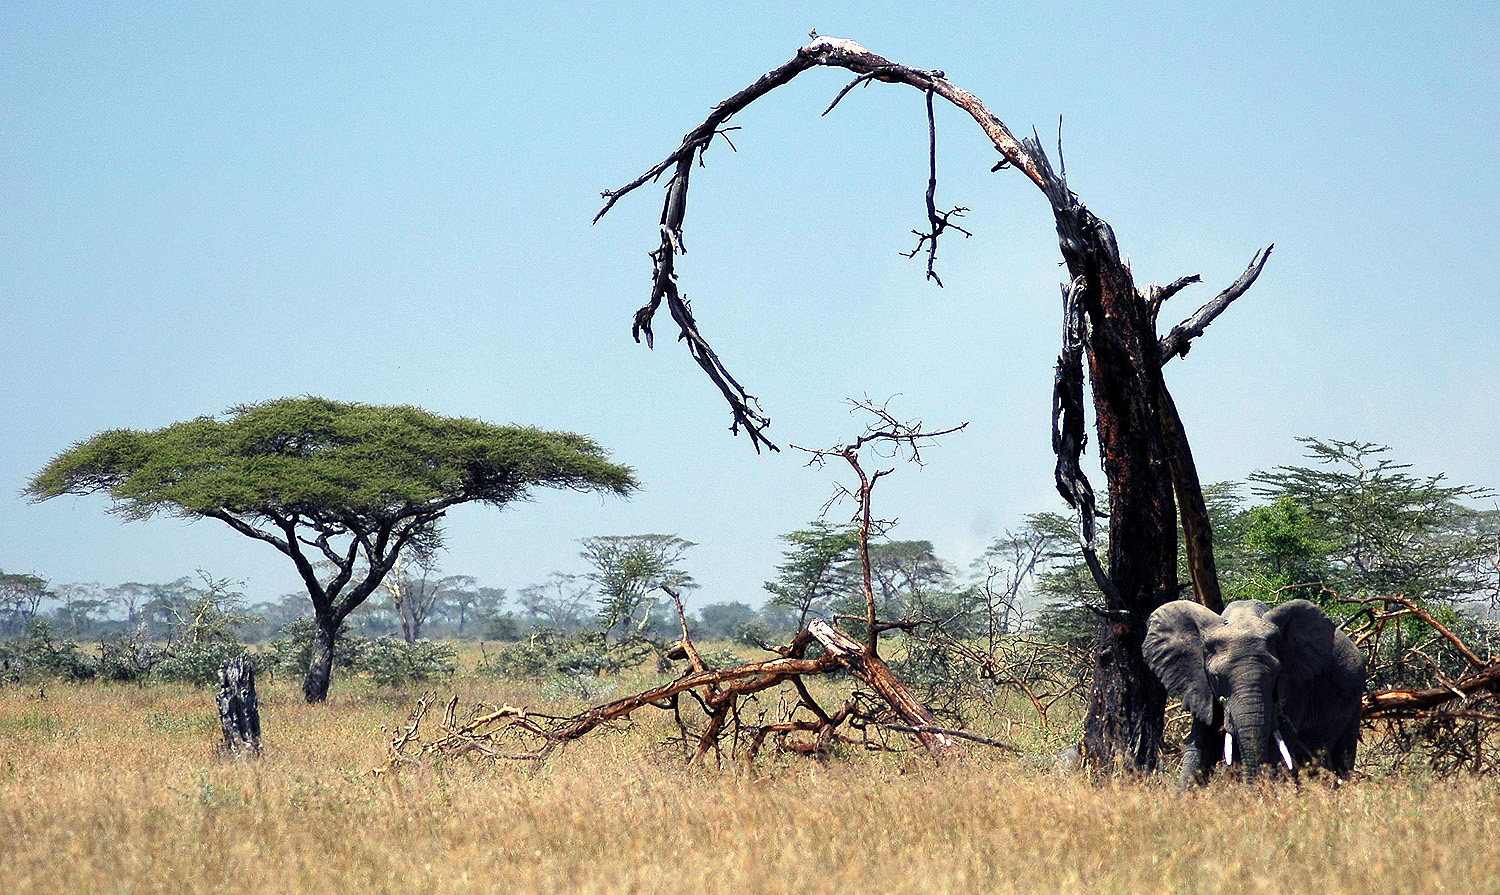 Serengeti-14.jpg